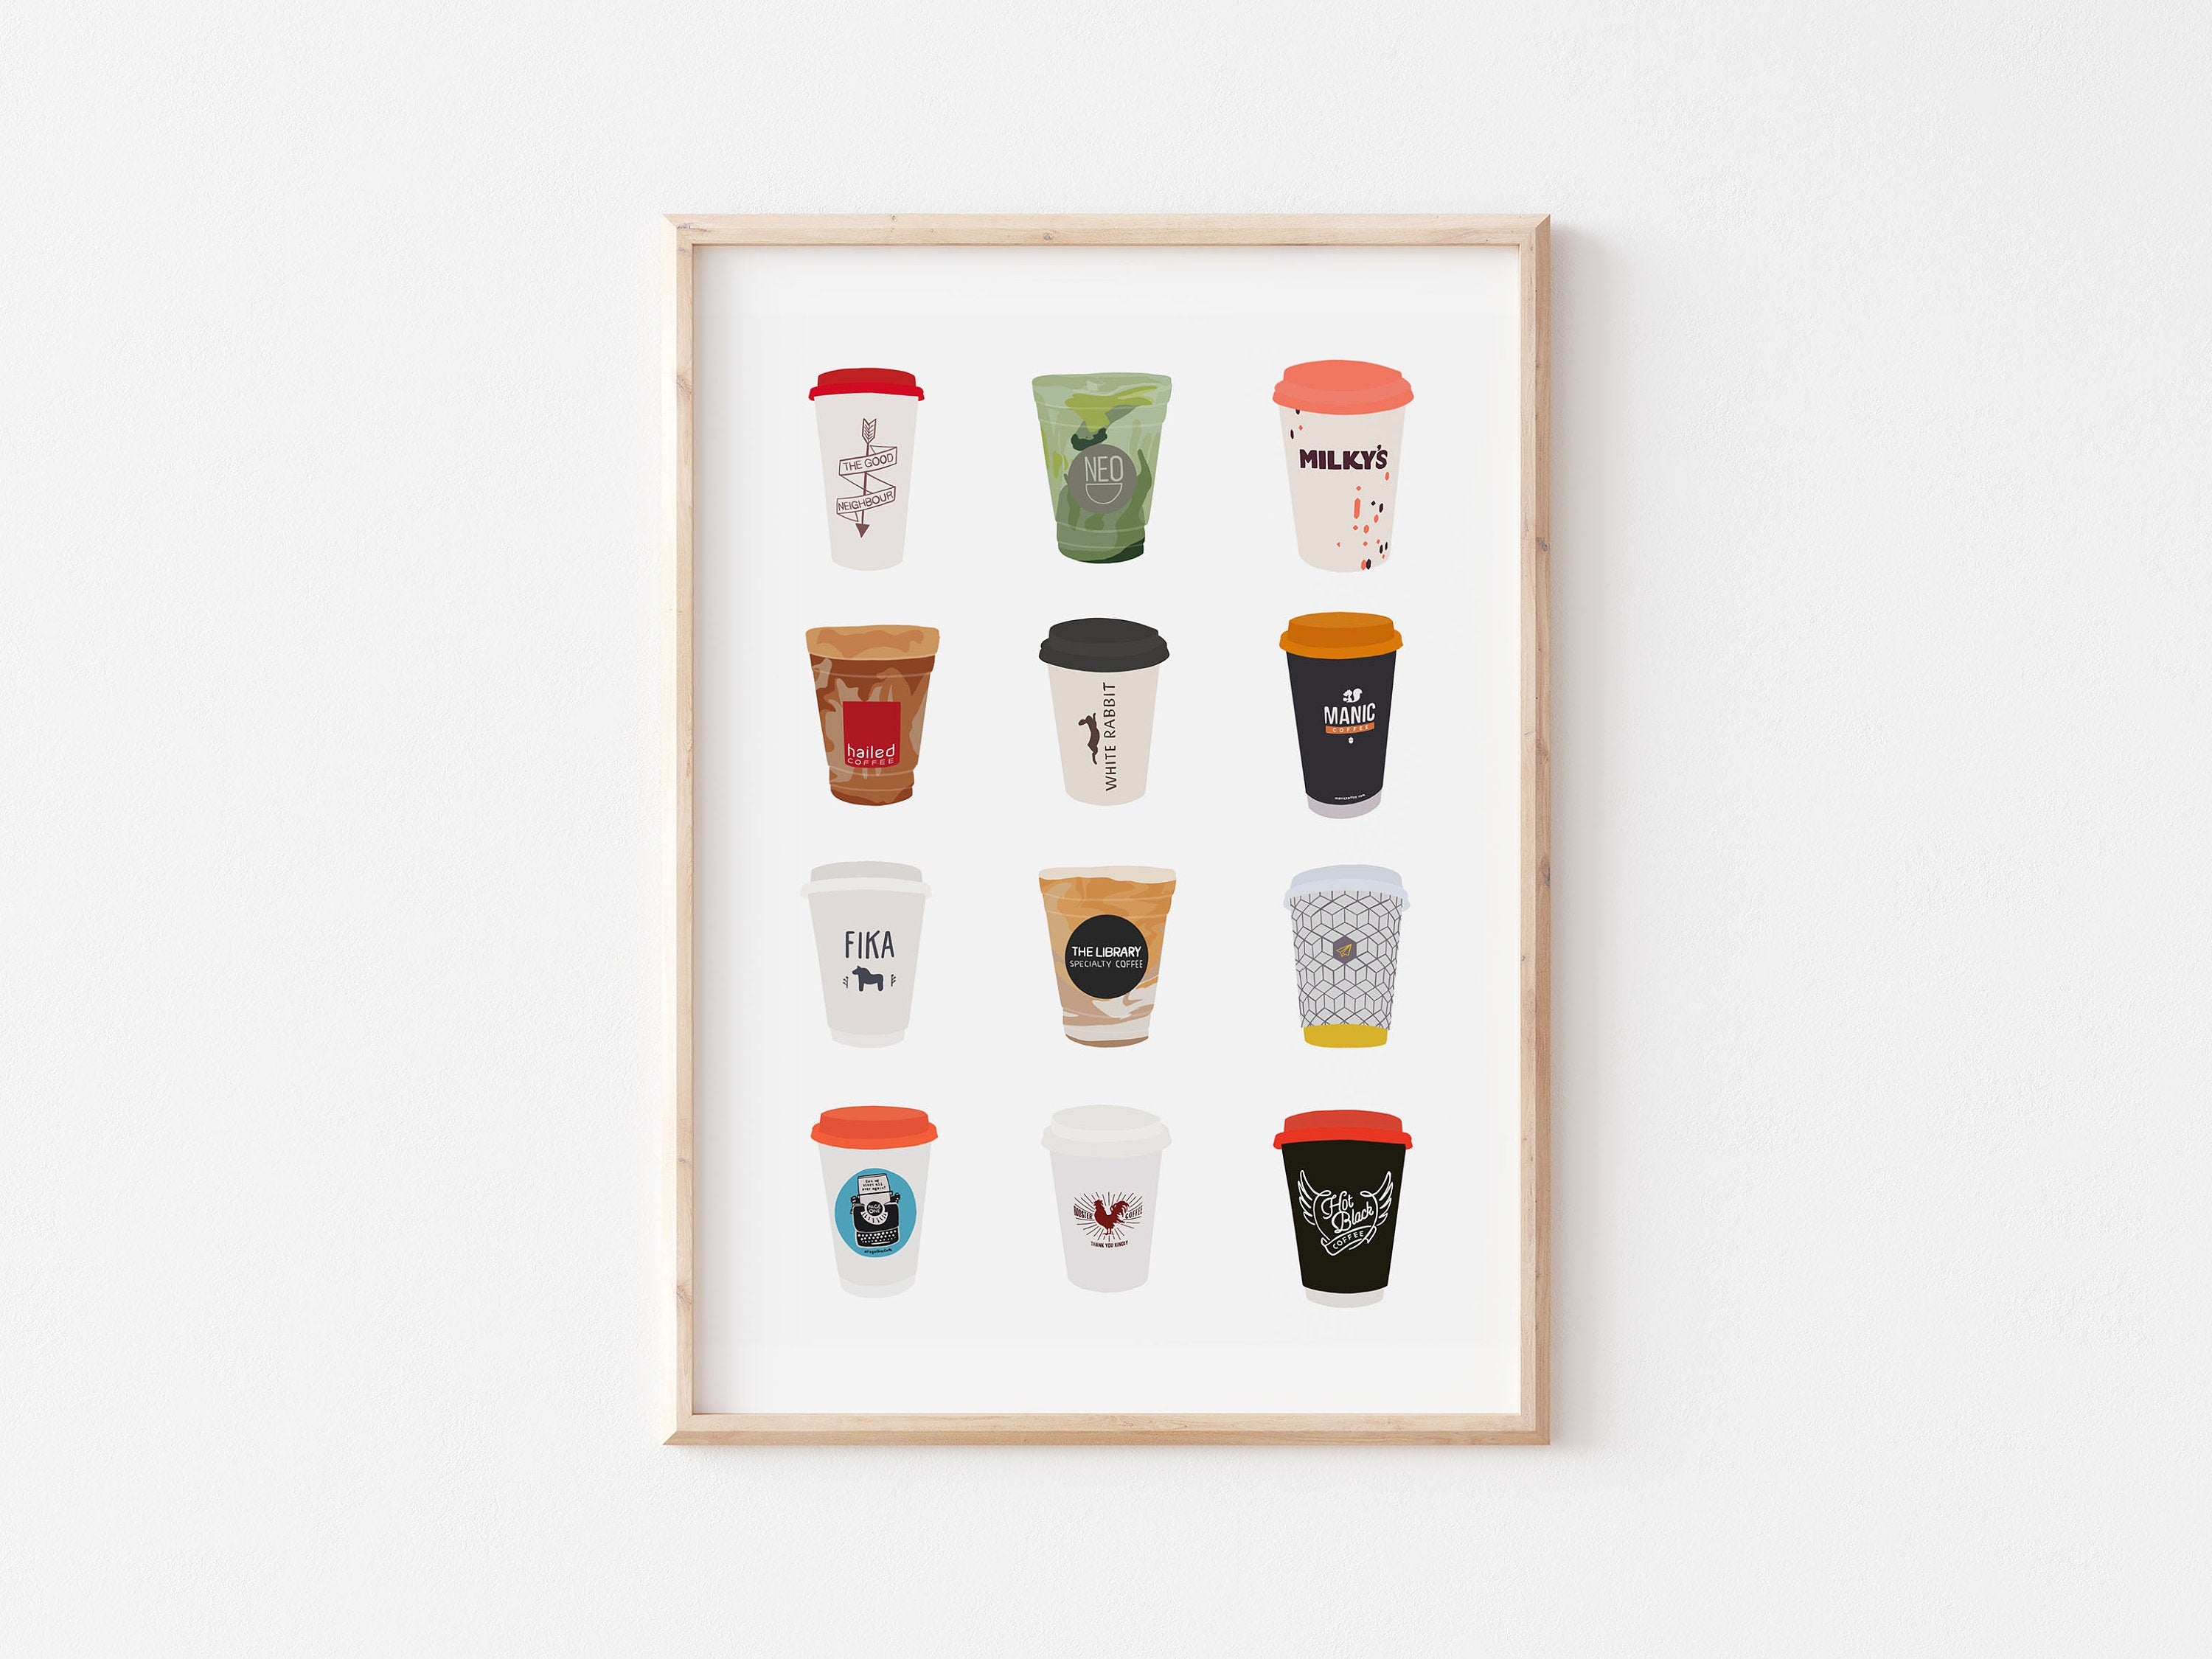 bookofjoe: World's smallest coffee cup